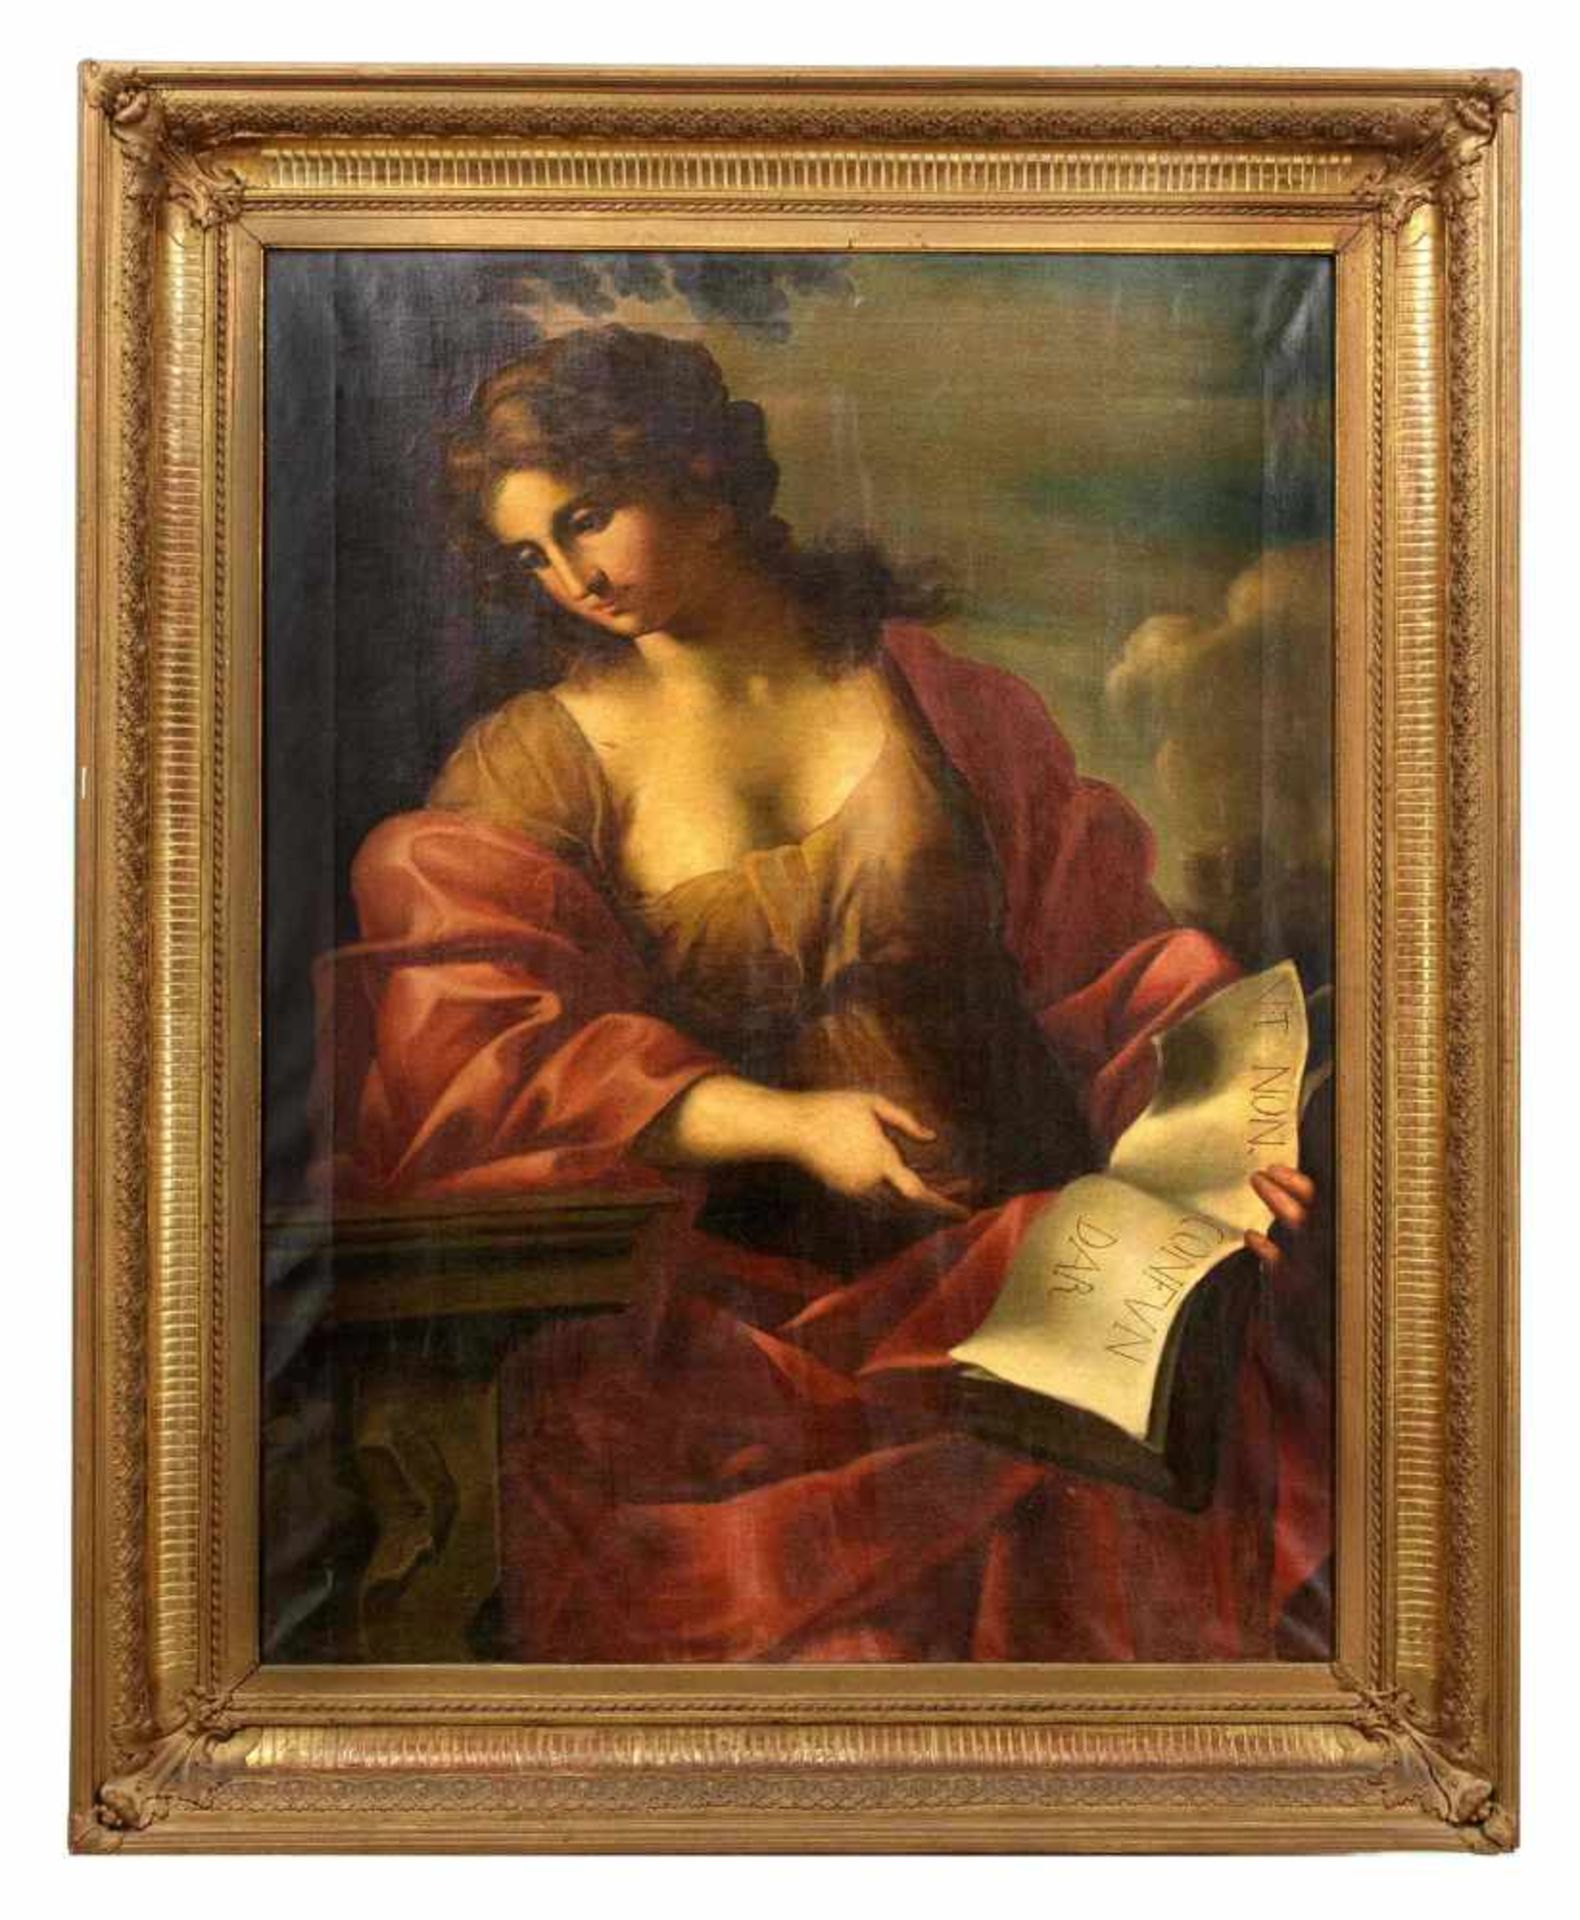 Romanelli, Giovanni Francesco (1610-1662), Kopie nach. Die Hl. Magdalena. Um 1800/Anfg.19. Jh. Öl/